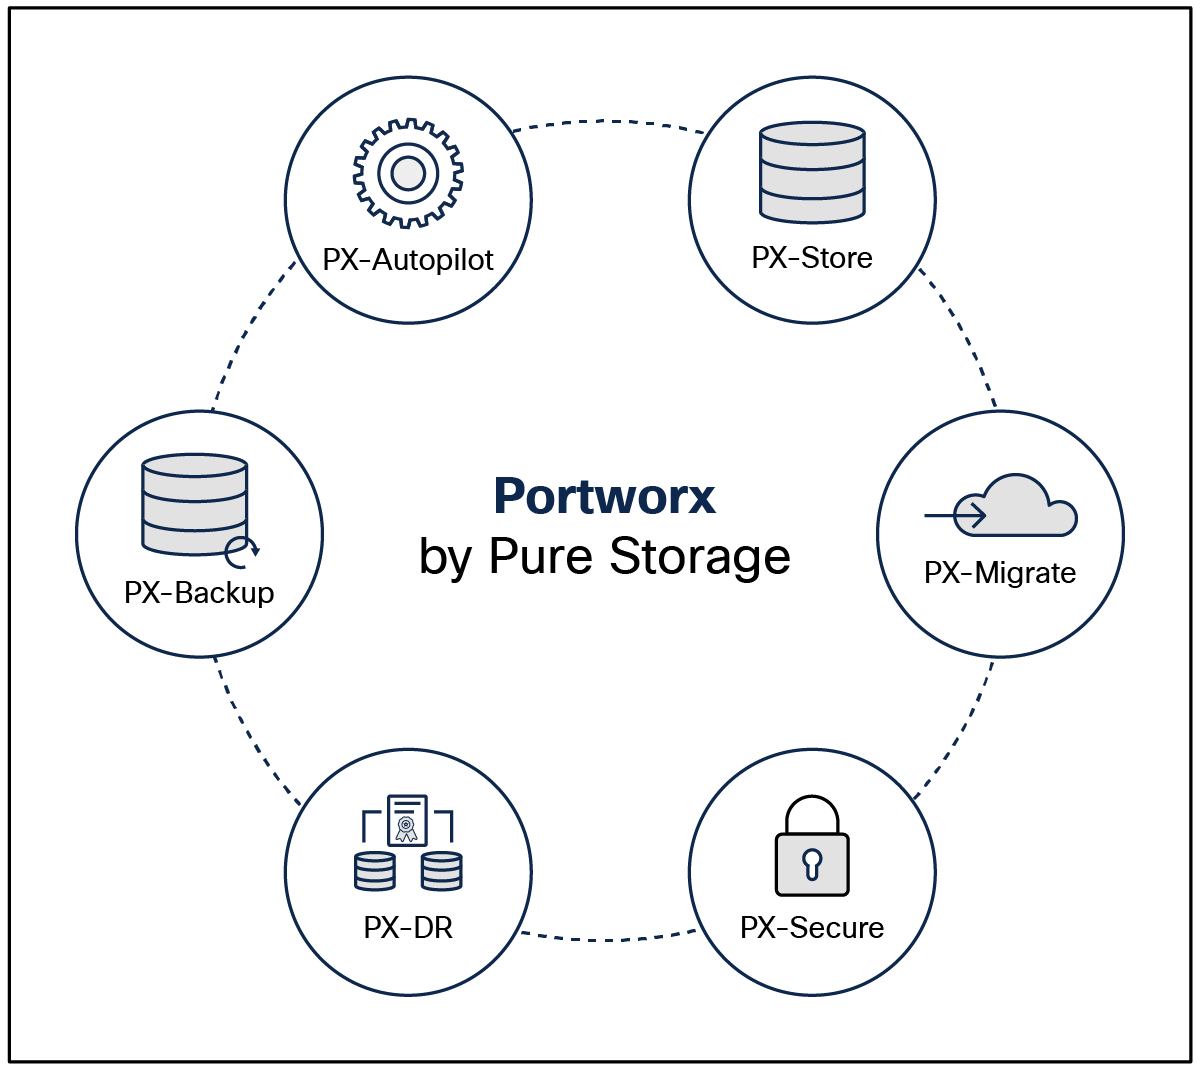 Portworx Enterprise storage